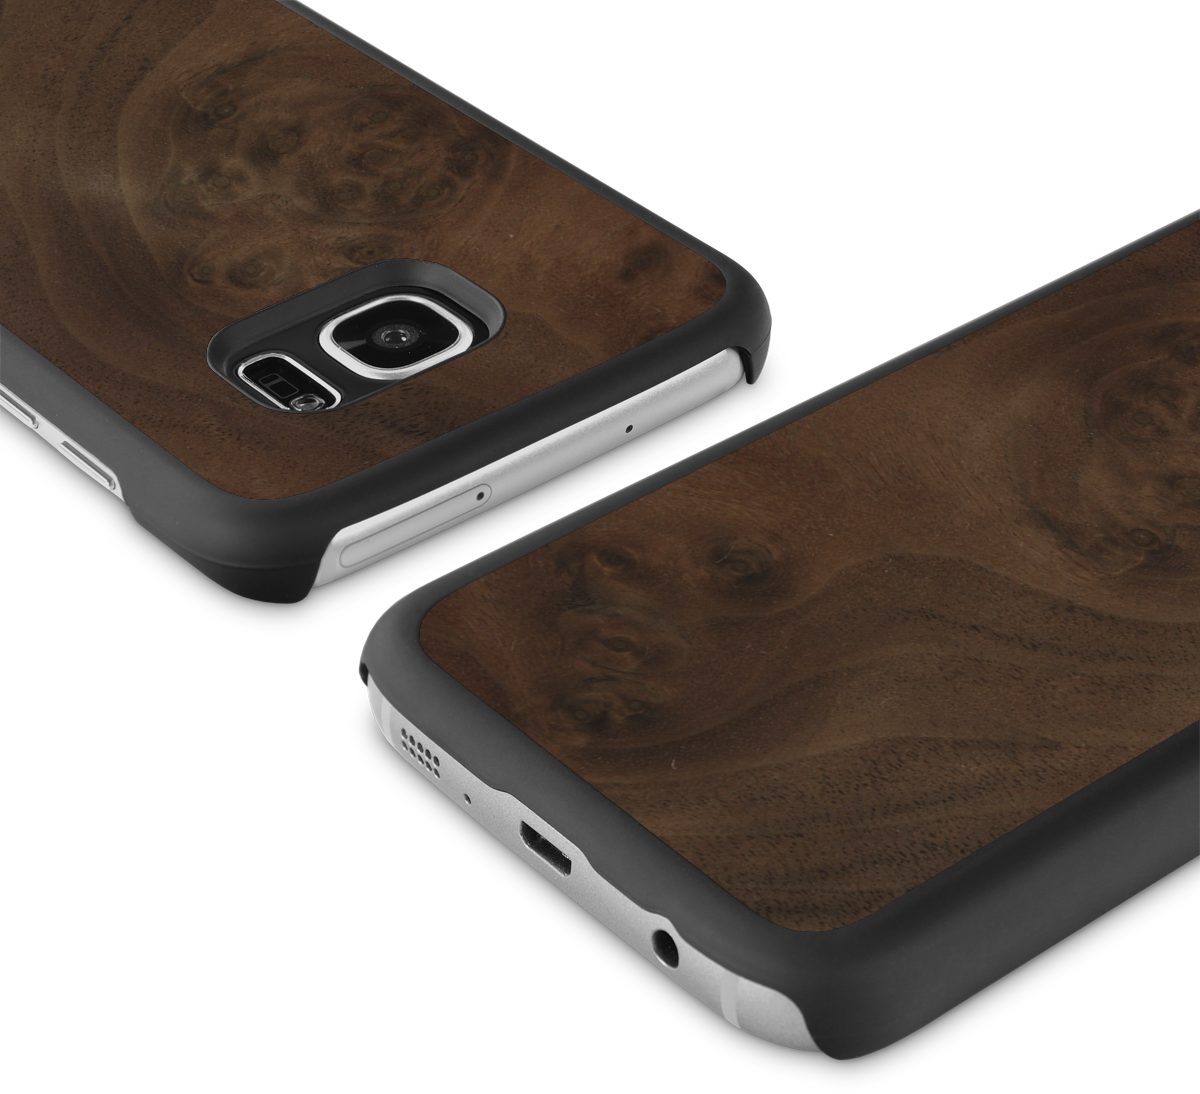 Samsung Galaxy S7 Edge — #WoodBack Snap Case